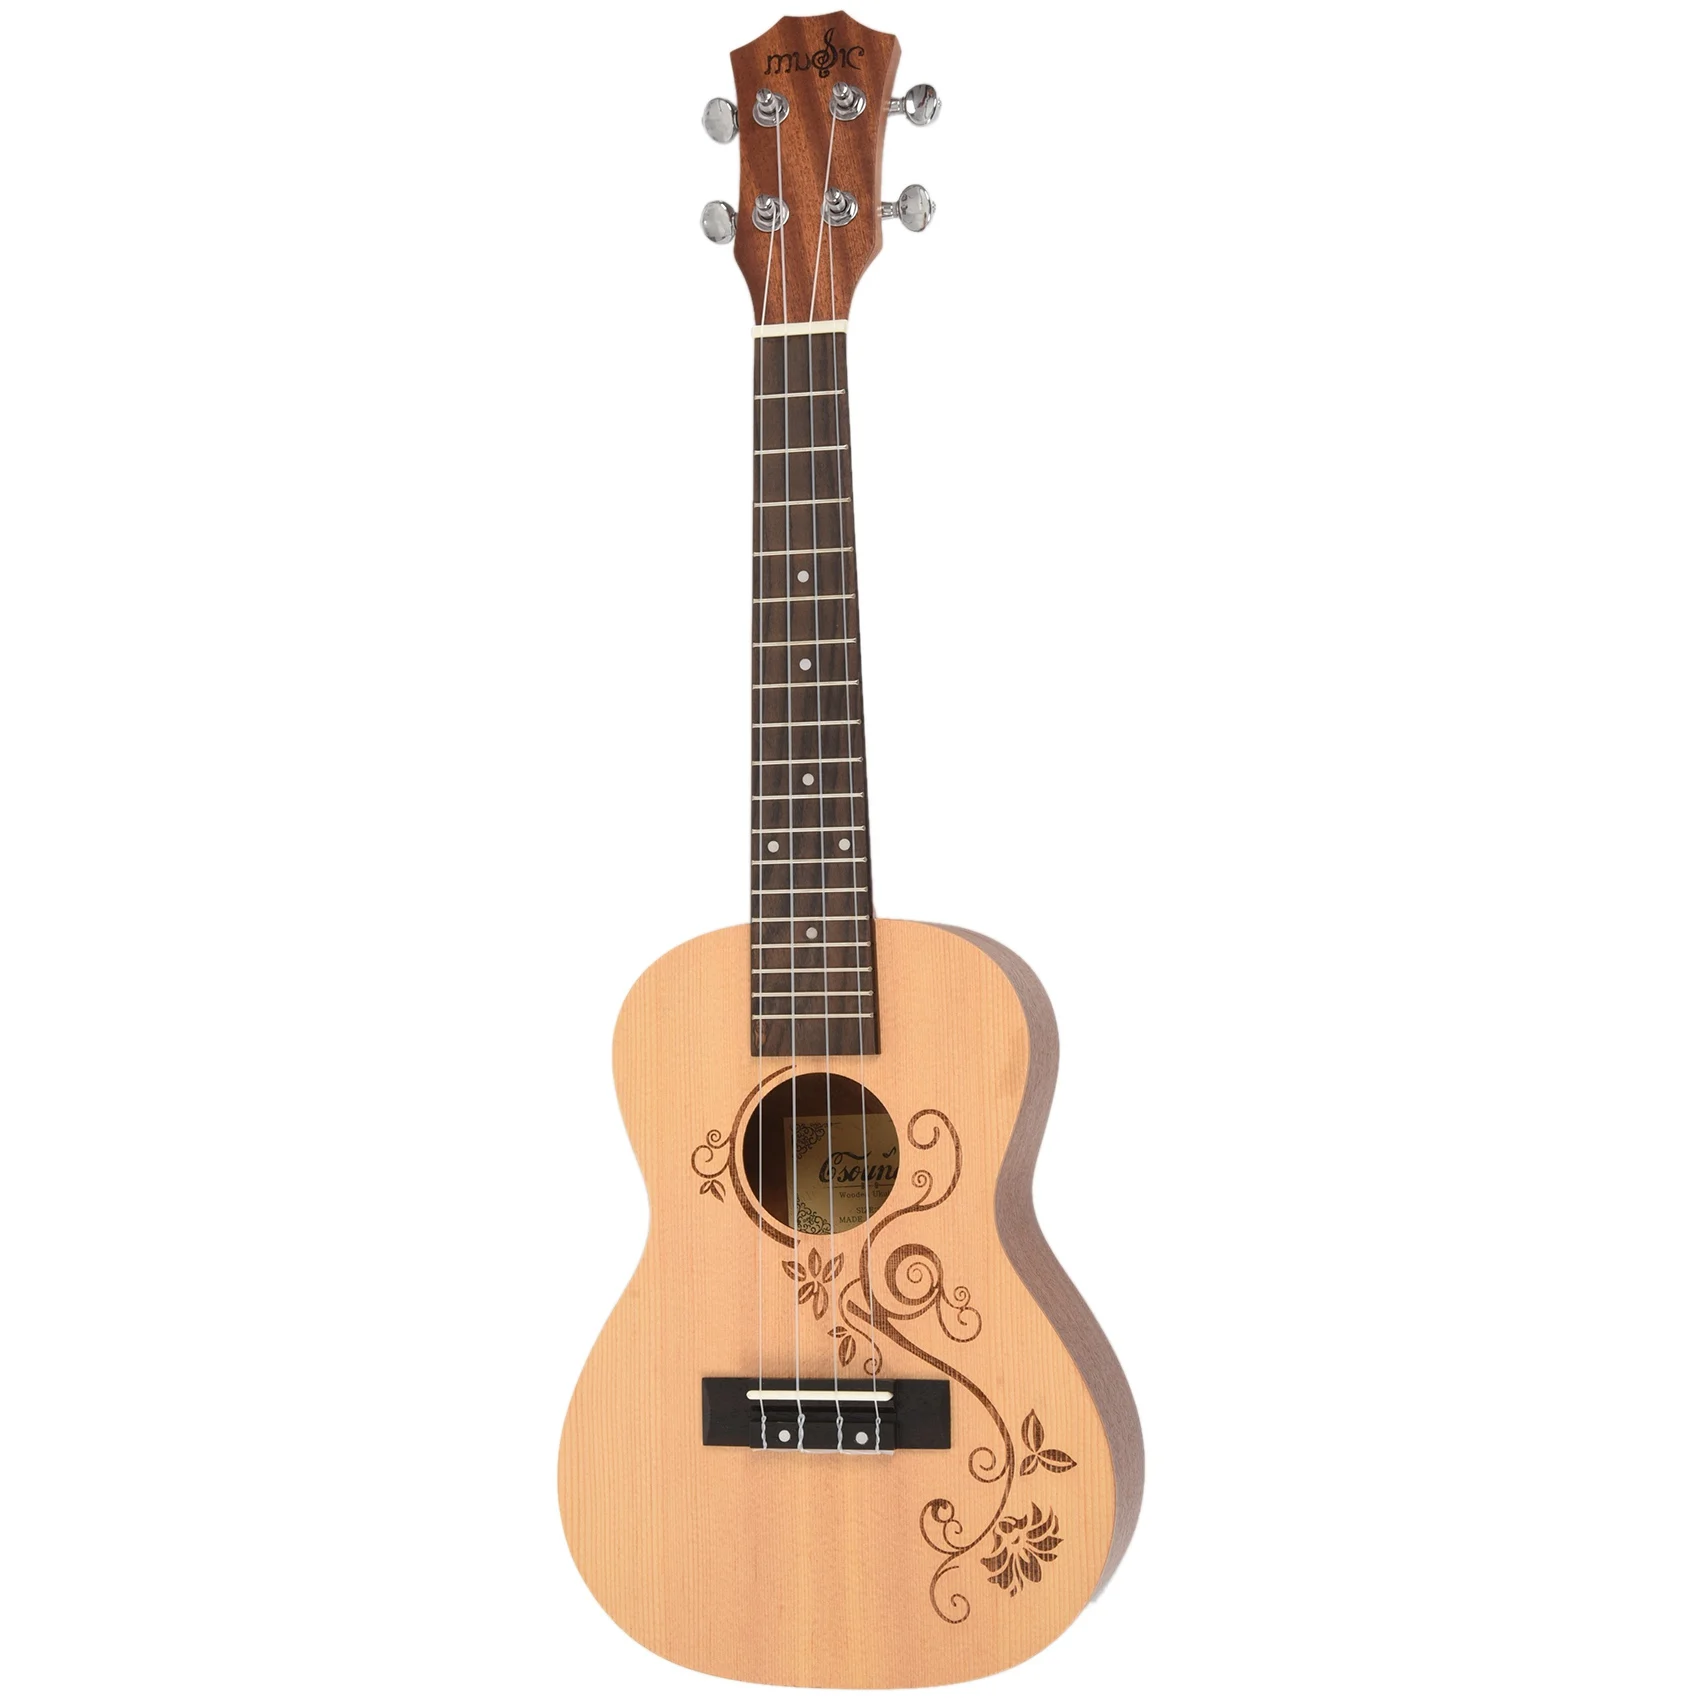 

23 Inch Ukulele Concert Acoustic Mini Guitar Rosewood Fretboard 4 Strings Spruce Wood Carvings Uke